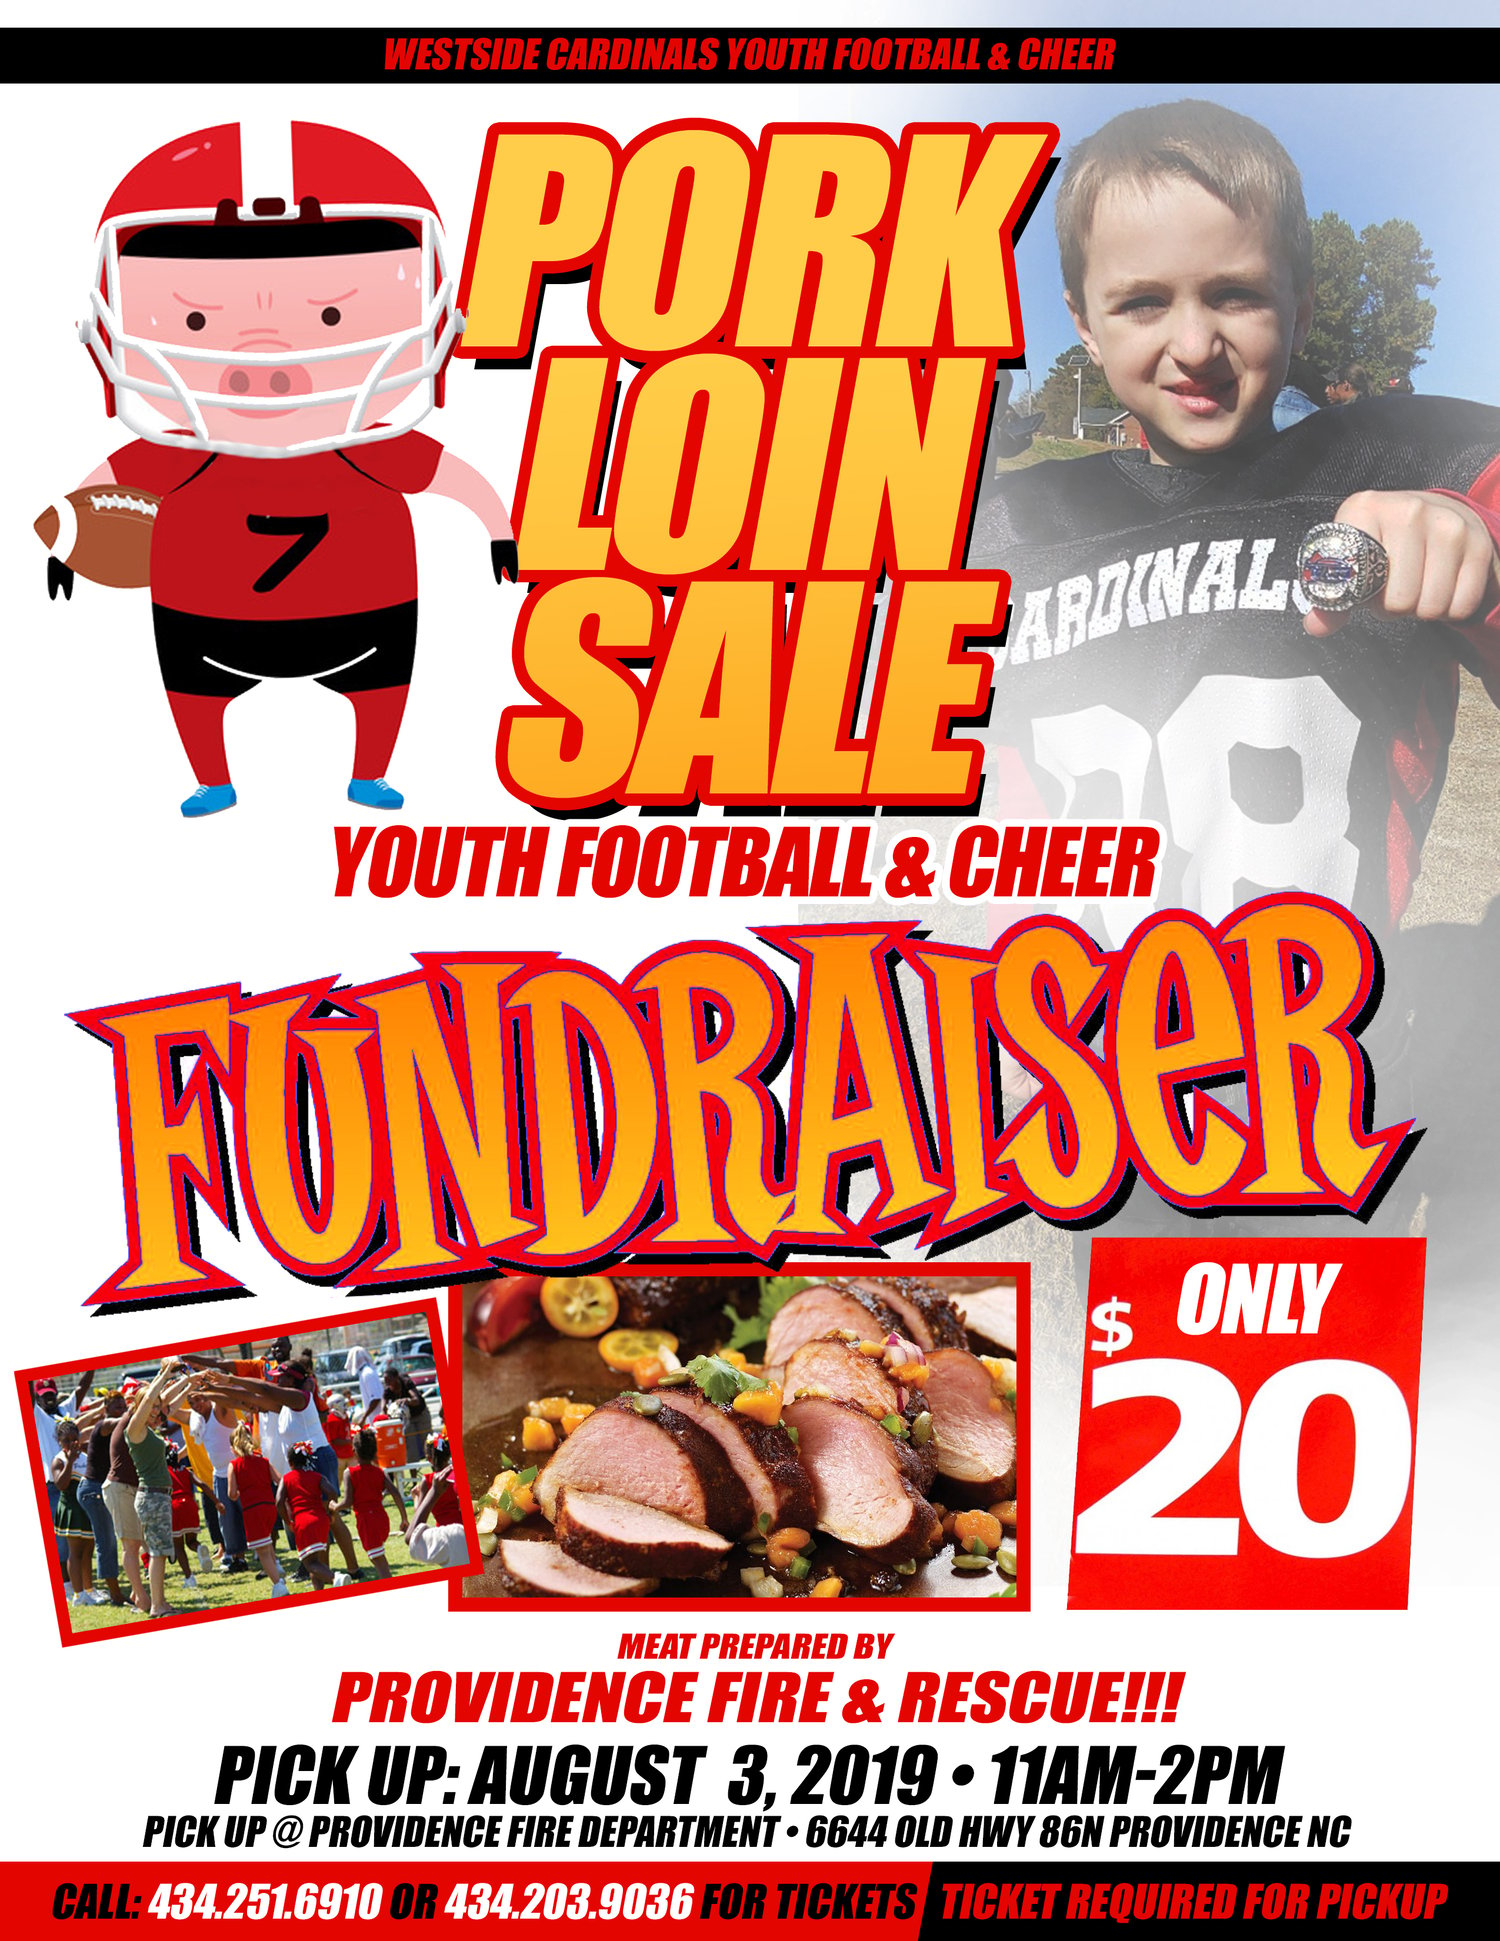 Image of 2019 Pork Loin Sale Ticket